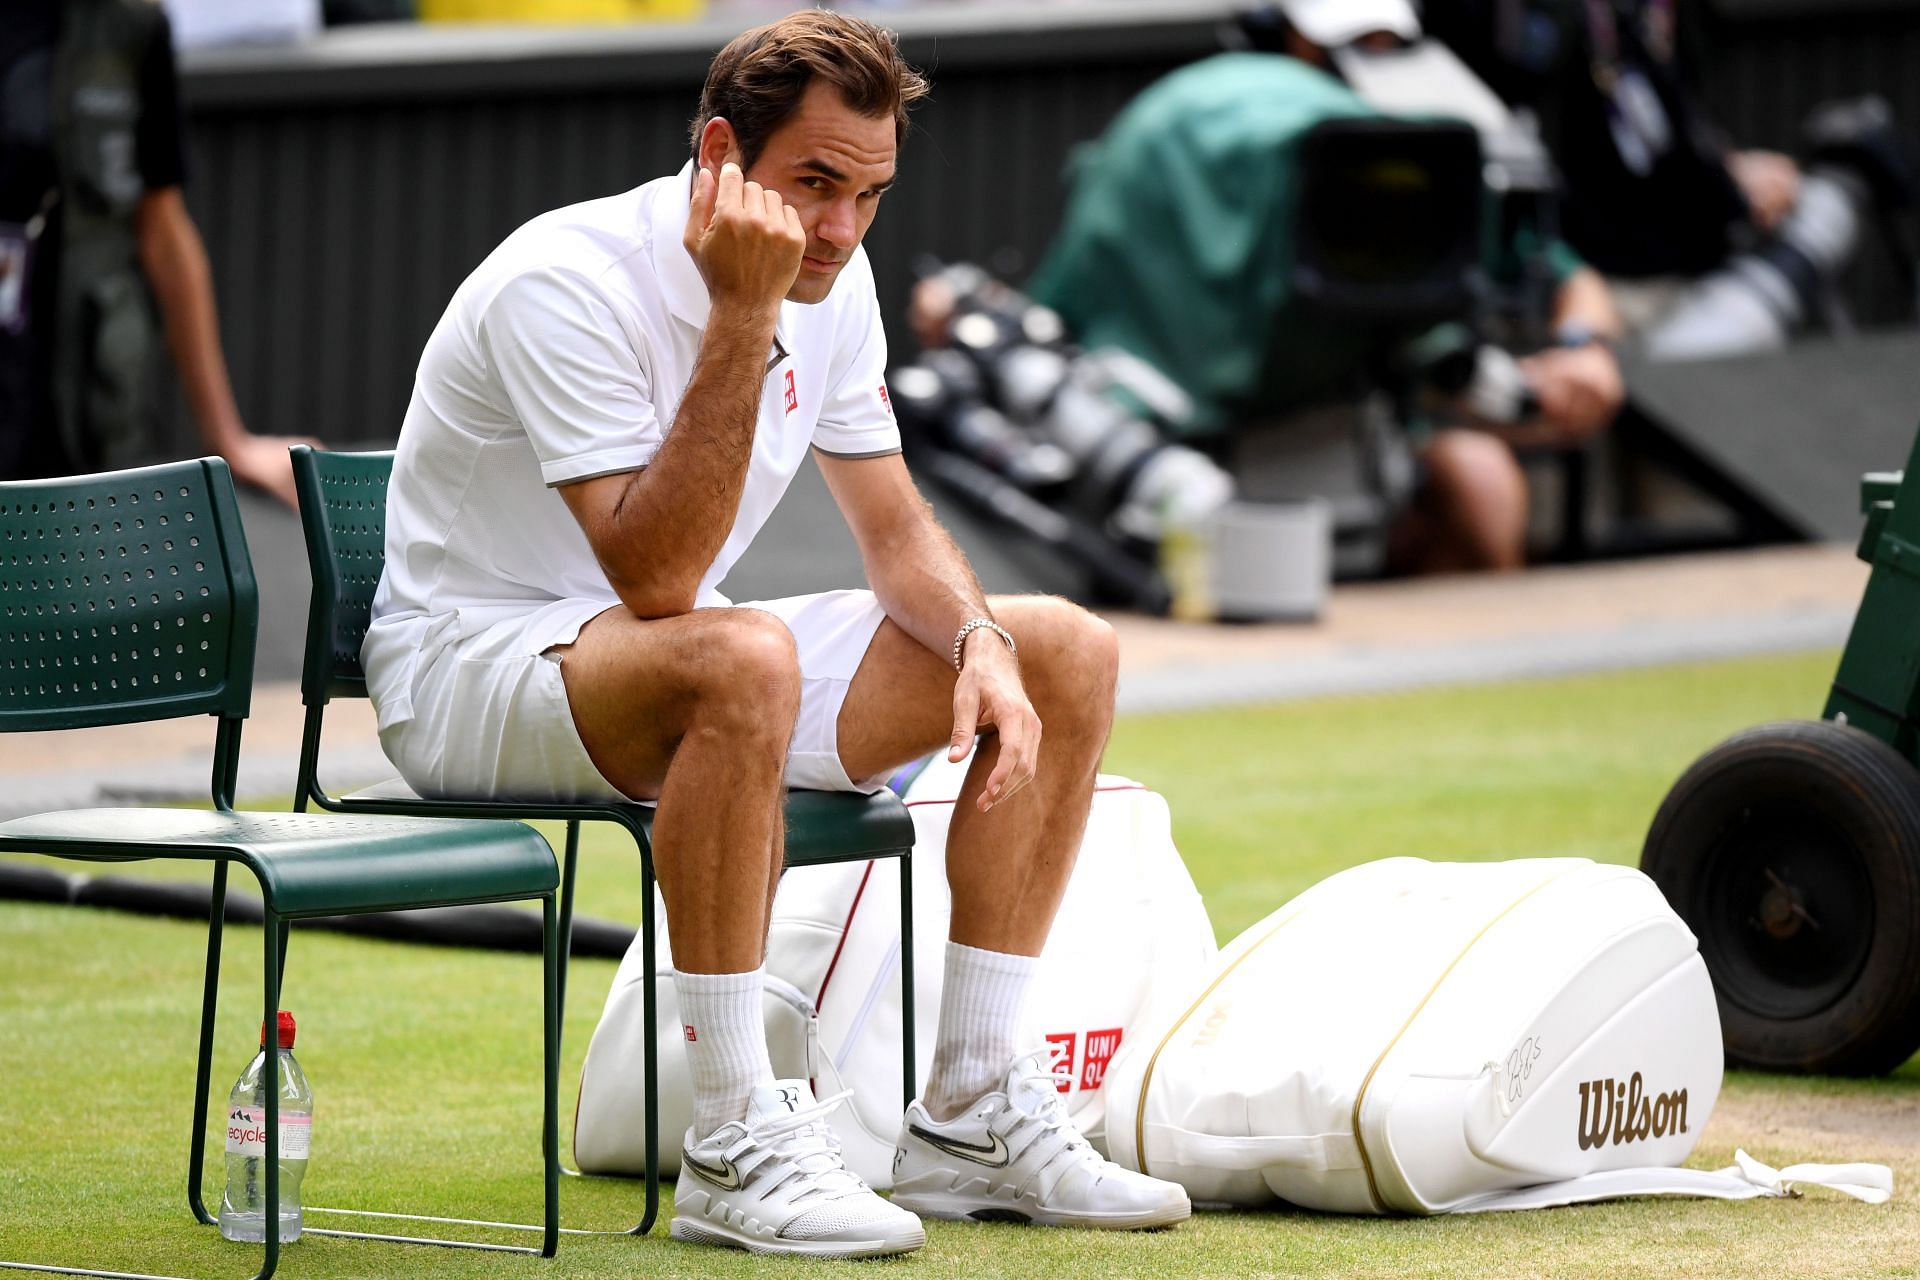 Roger Federer cuts a dejected figure following defeat to Novak Djokovic in the 2019 Wimbledon final.